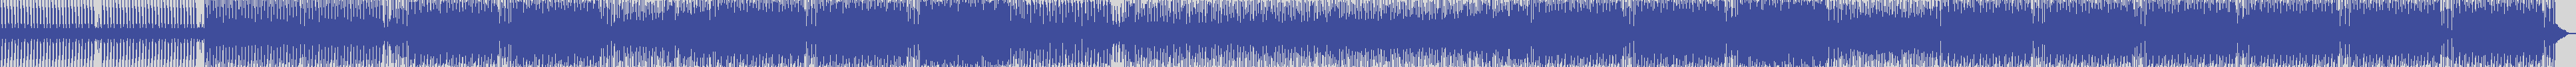 atomic_recordings [AR021] Paul Darey, Hannes Bruniic - Best Friends [Original Mix] audio wave form